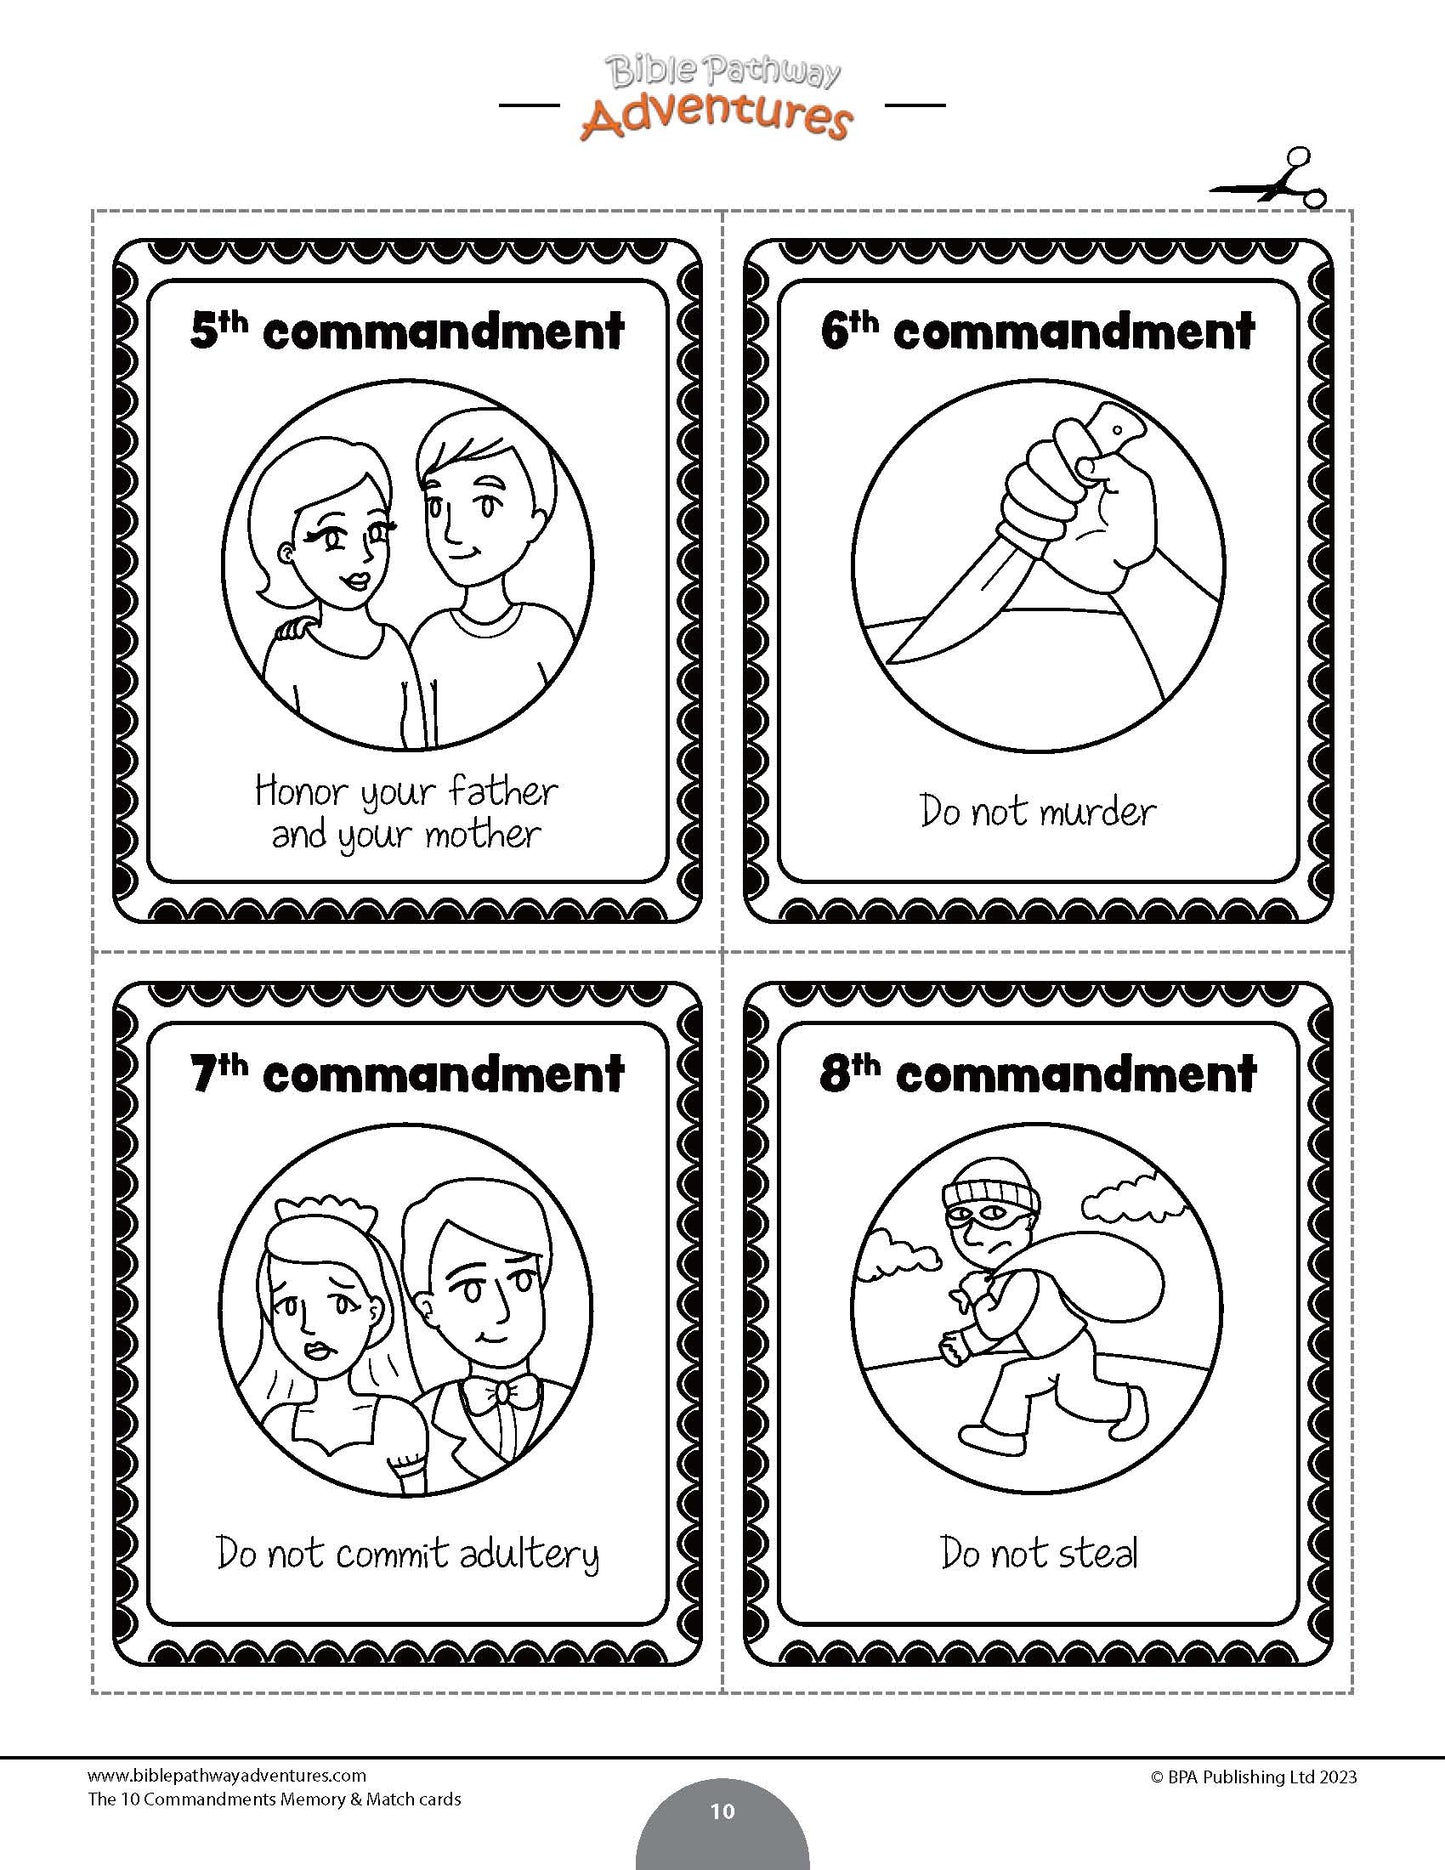 10 Commandments Memory & Match Cards (PDF)